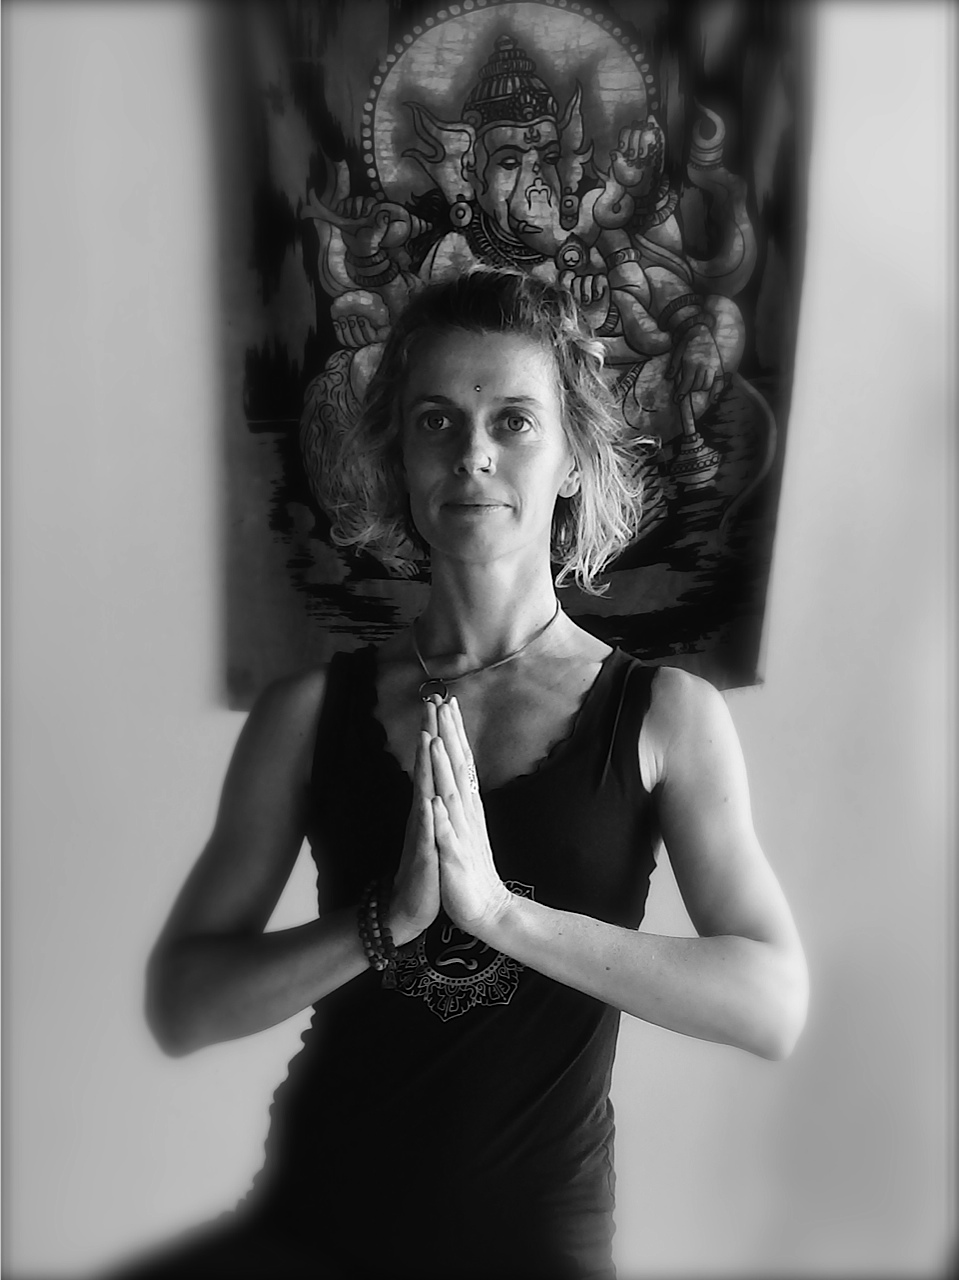 Santosha Massage & Yoga | 126 Minsterly Rd, Denmark WA 6333, Australia | Phone: 0414 651 331